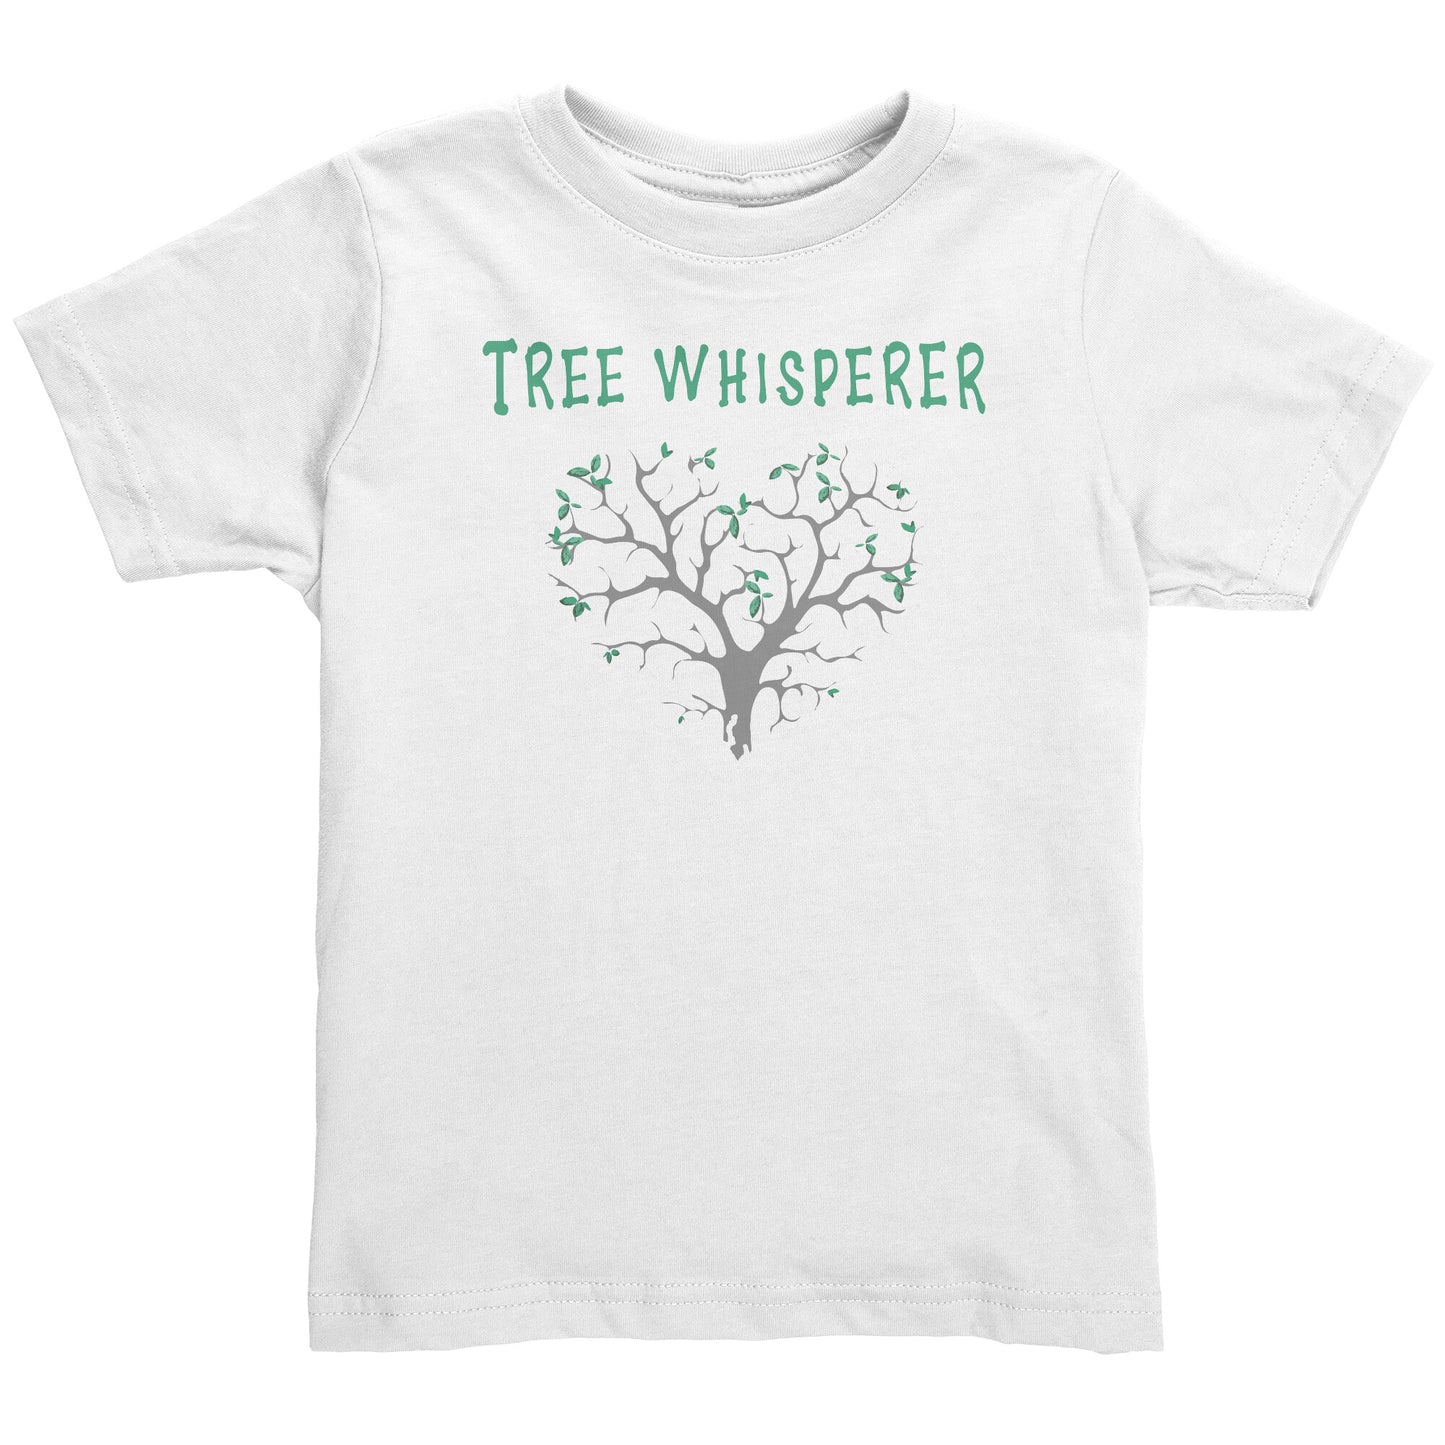 Tree Whisperer Toddler Shirts